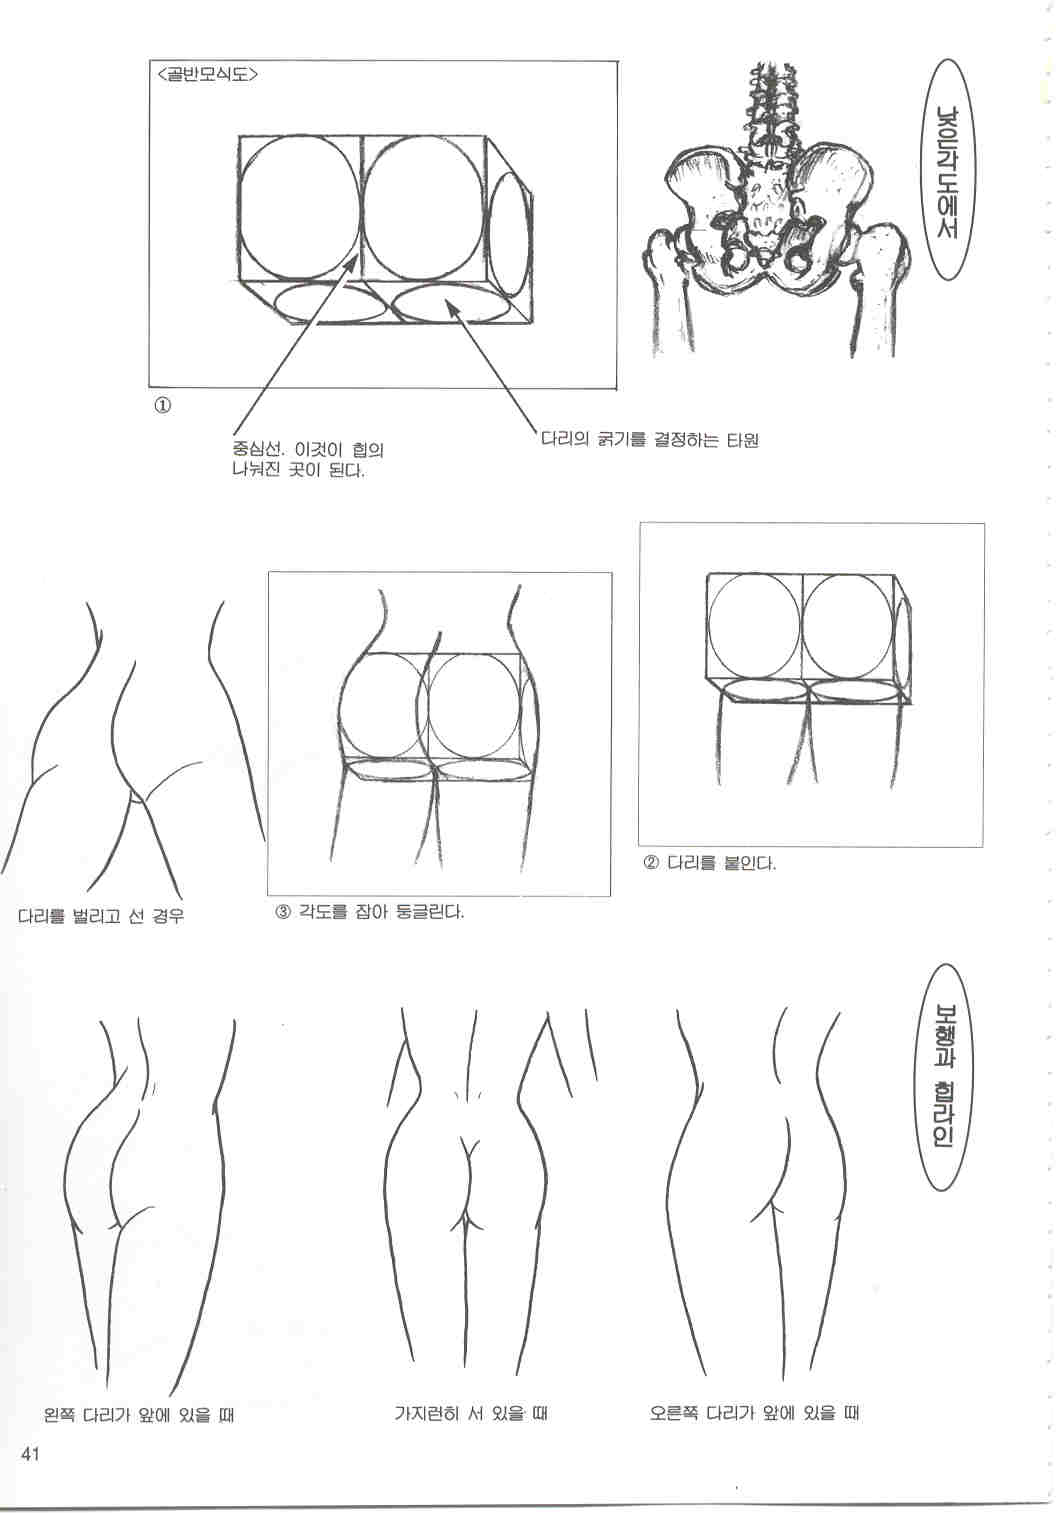 How to draw girls 1 (korean) 